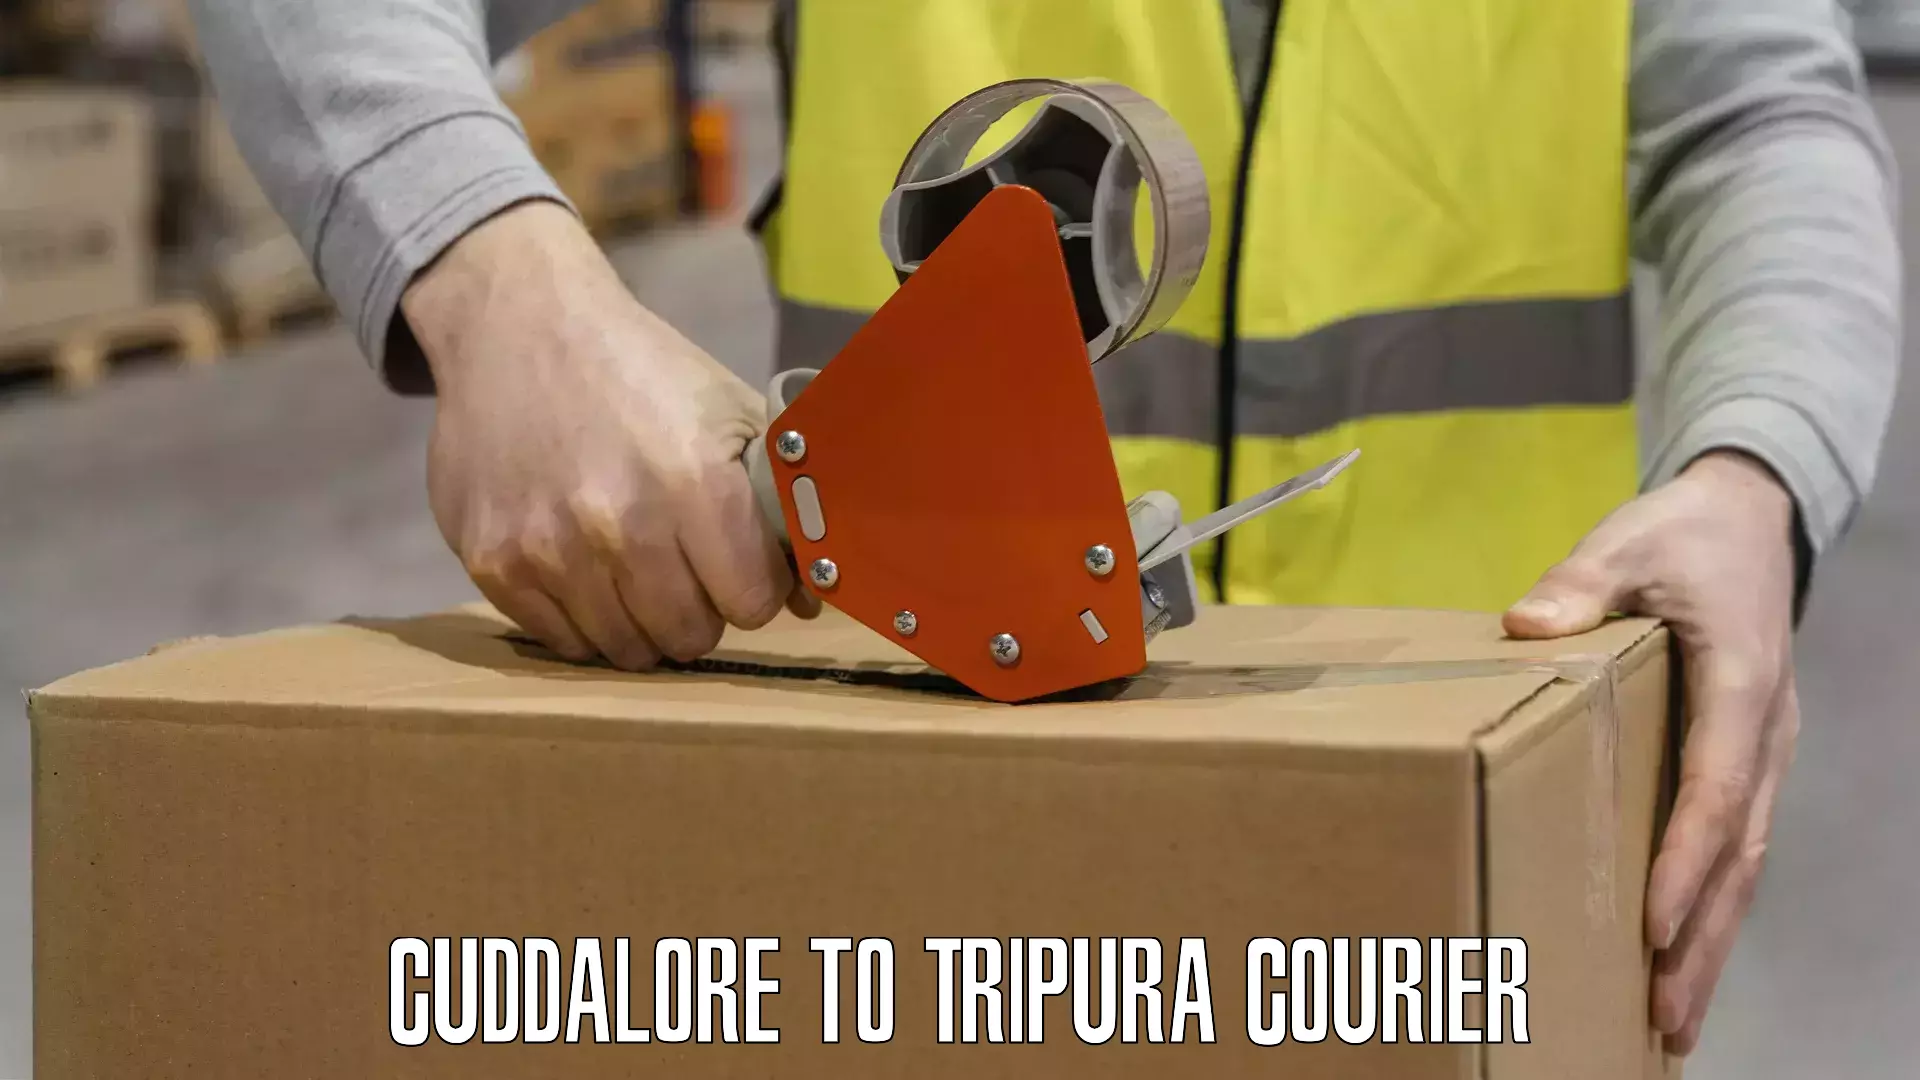 Professional courier handling Cuddalore to Tripura